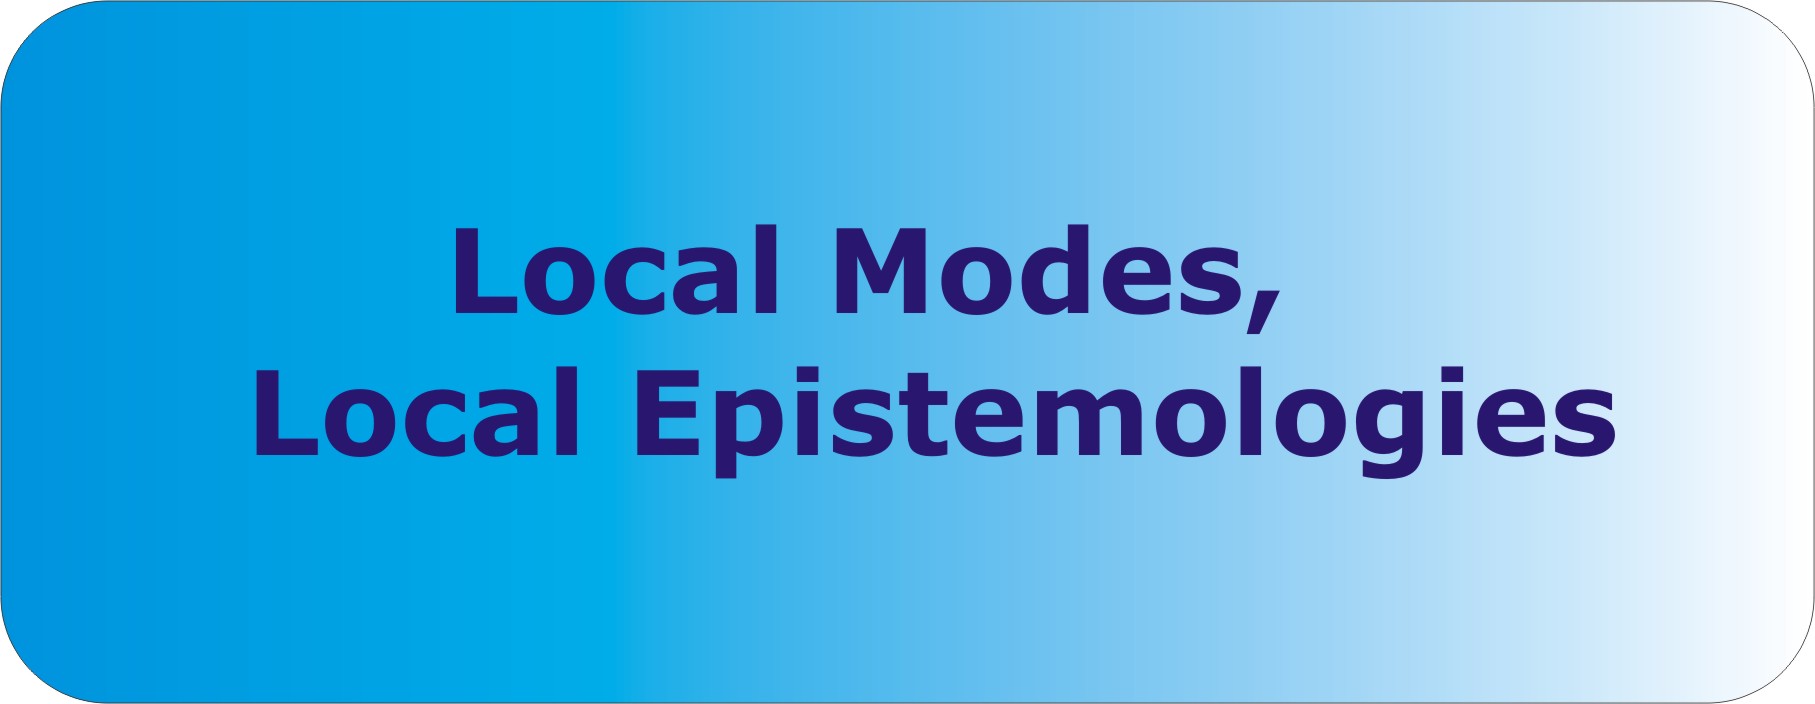 Local Modes, Local Epistemologies